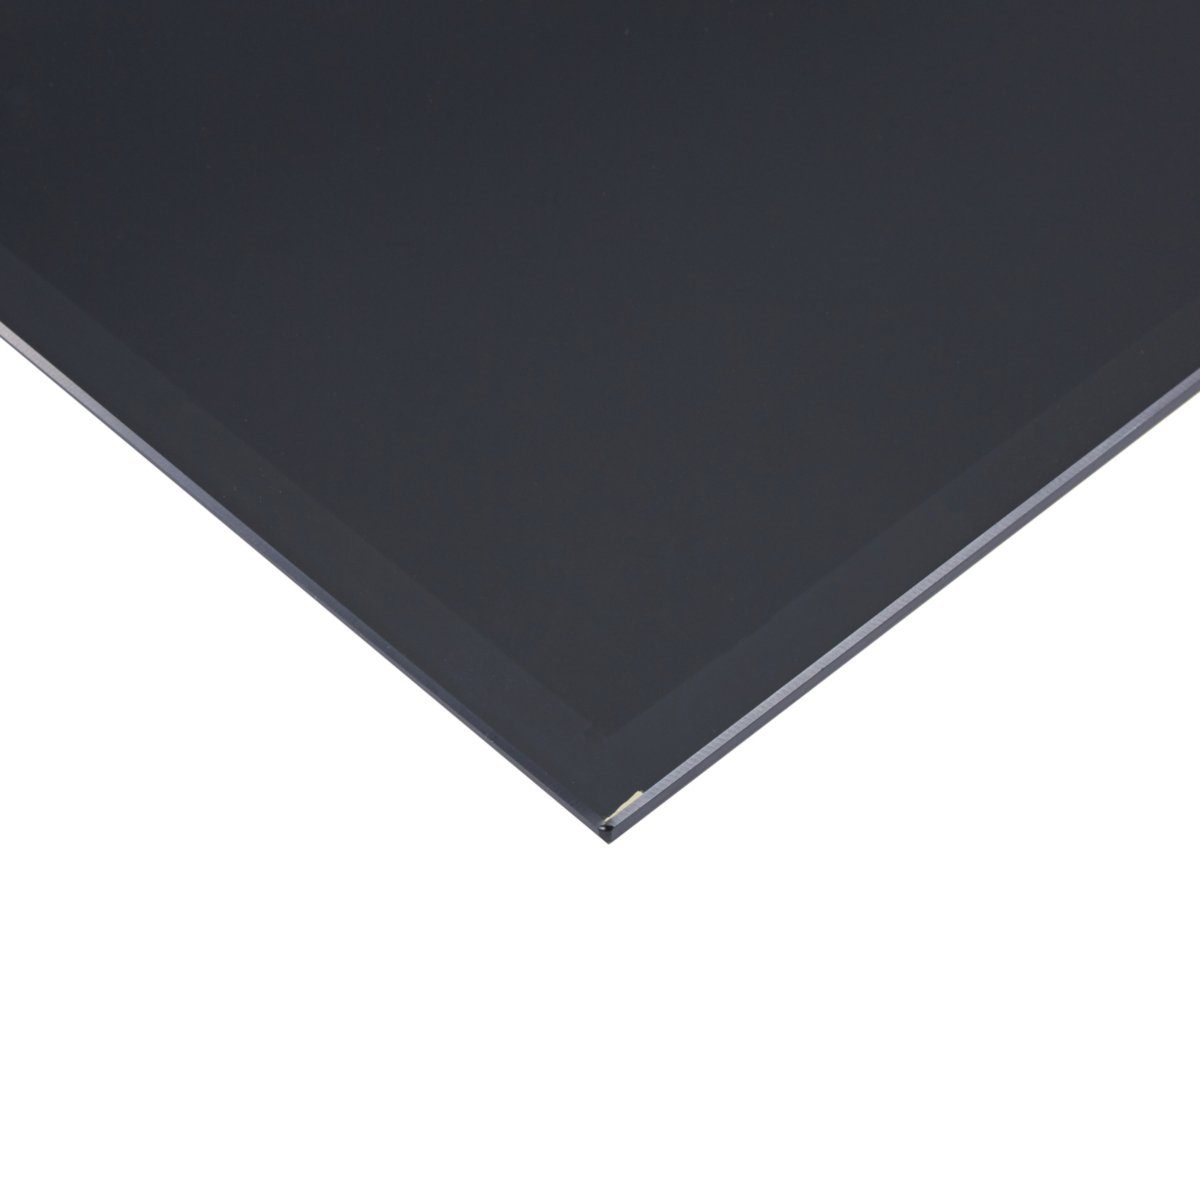 Kaminglas quadratisch schwarz Glasplatte 70x70 Tischplatte DIY HOOZ Tisch, cm